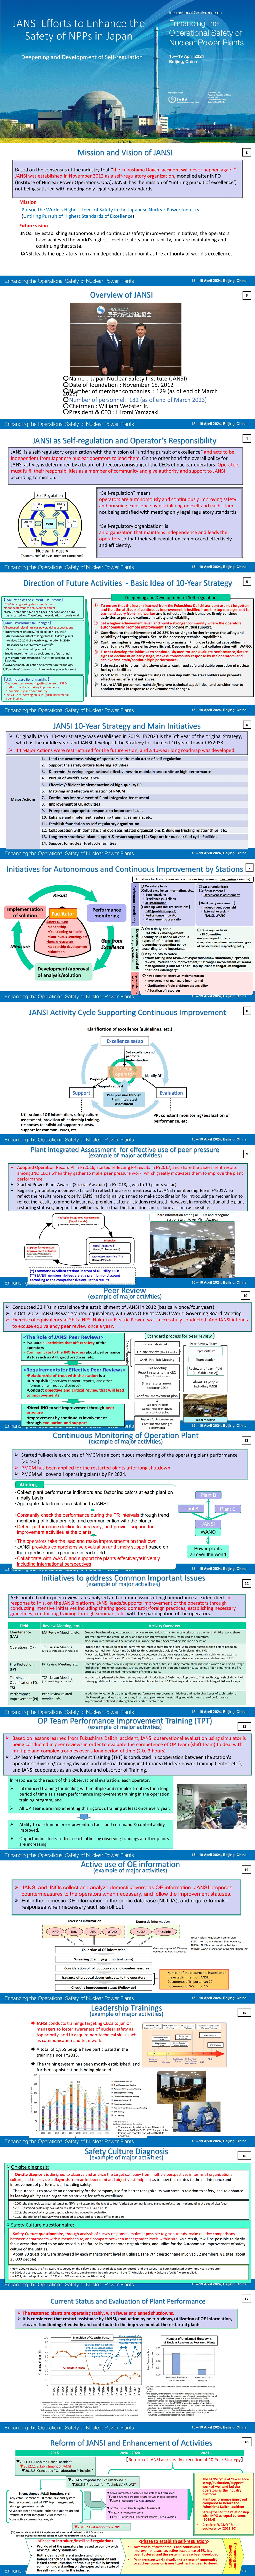 17_08_T Watanabe_ JANSI efforts to enhance Safety of NPPs in Japan_00.jpg